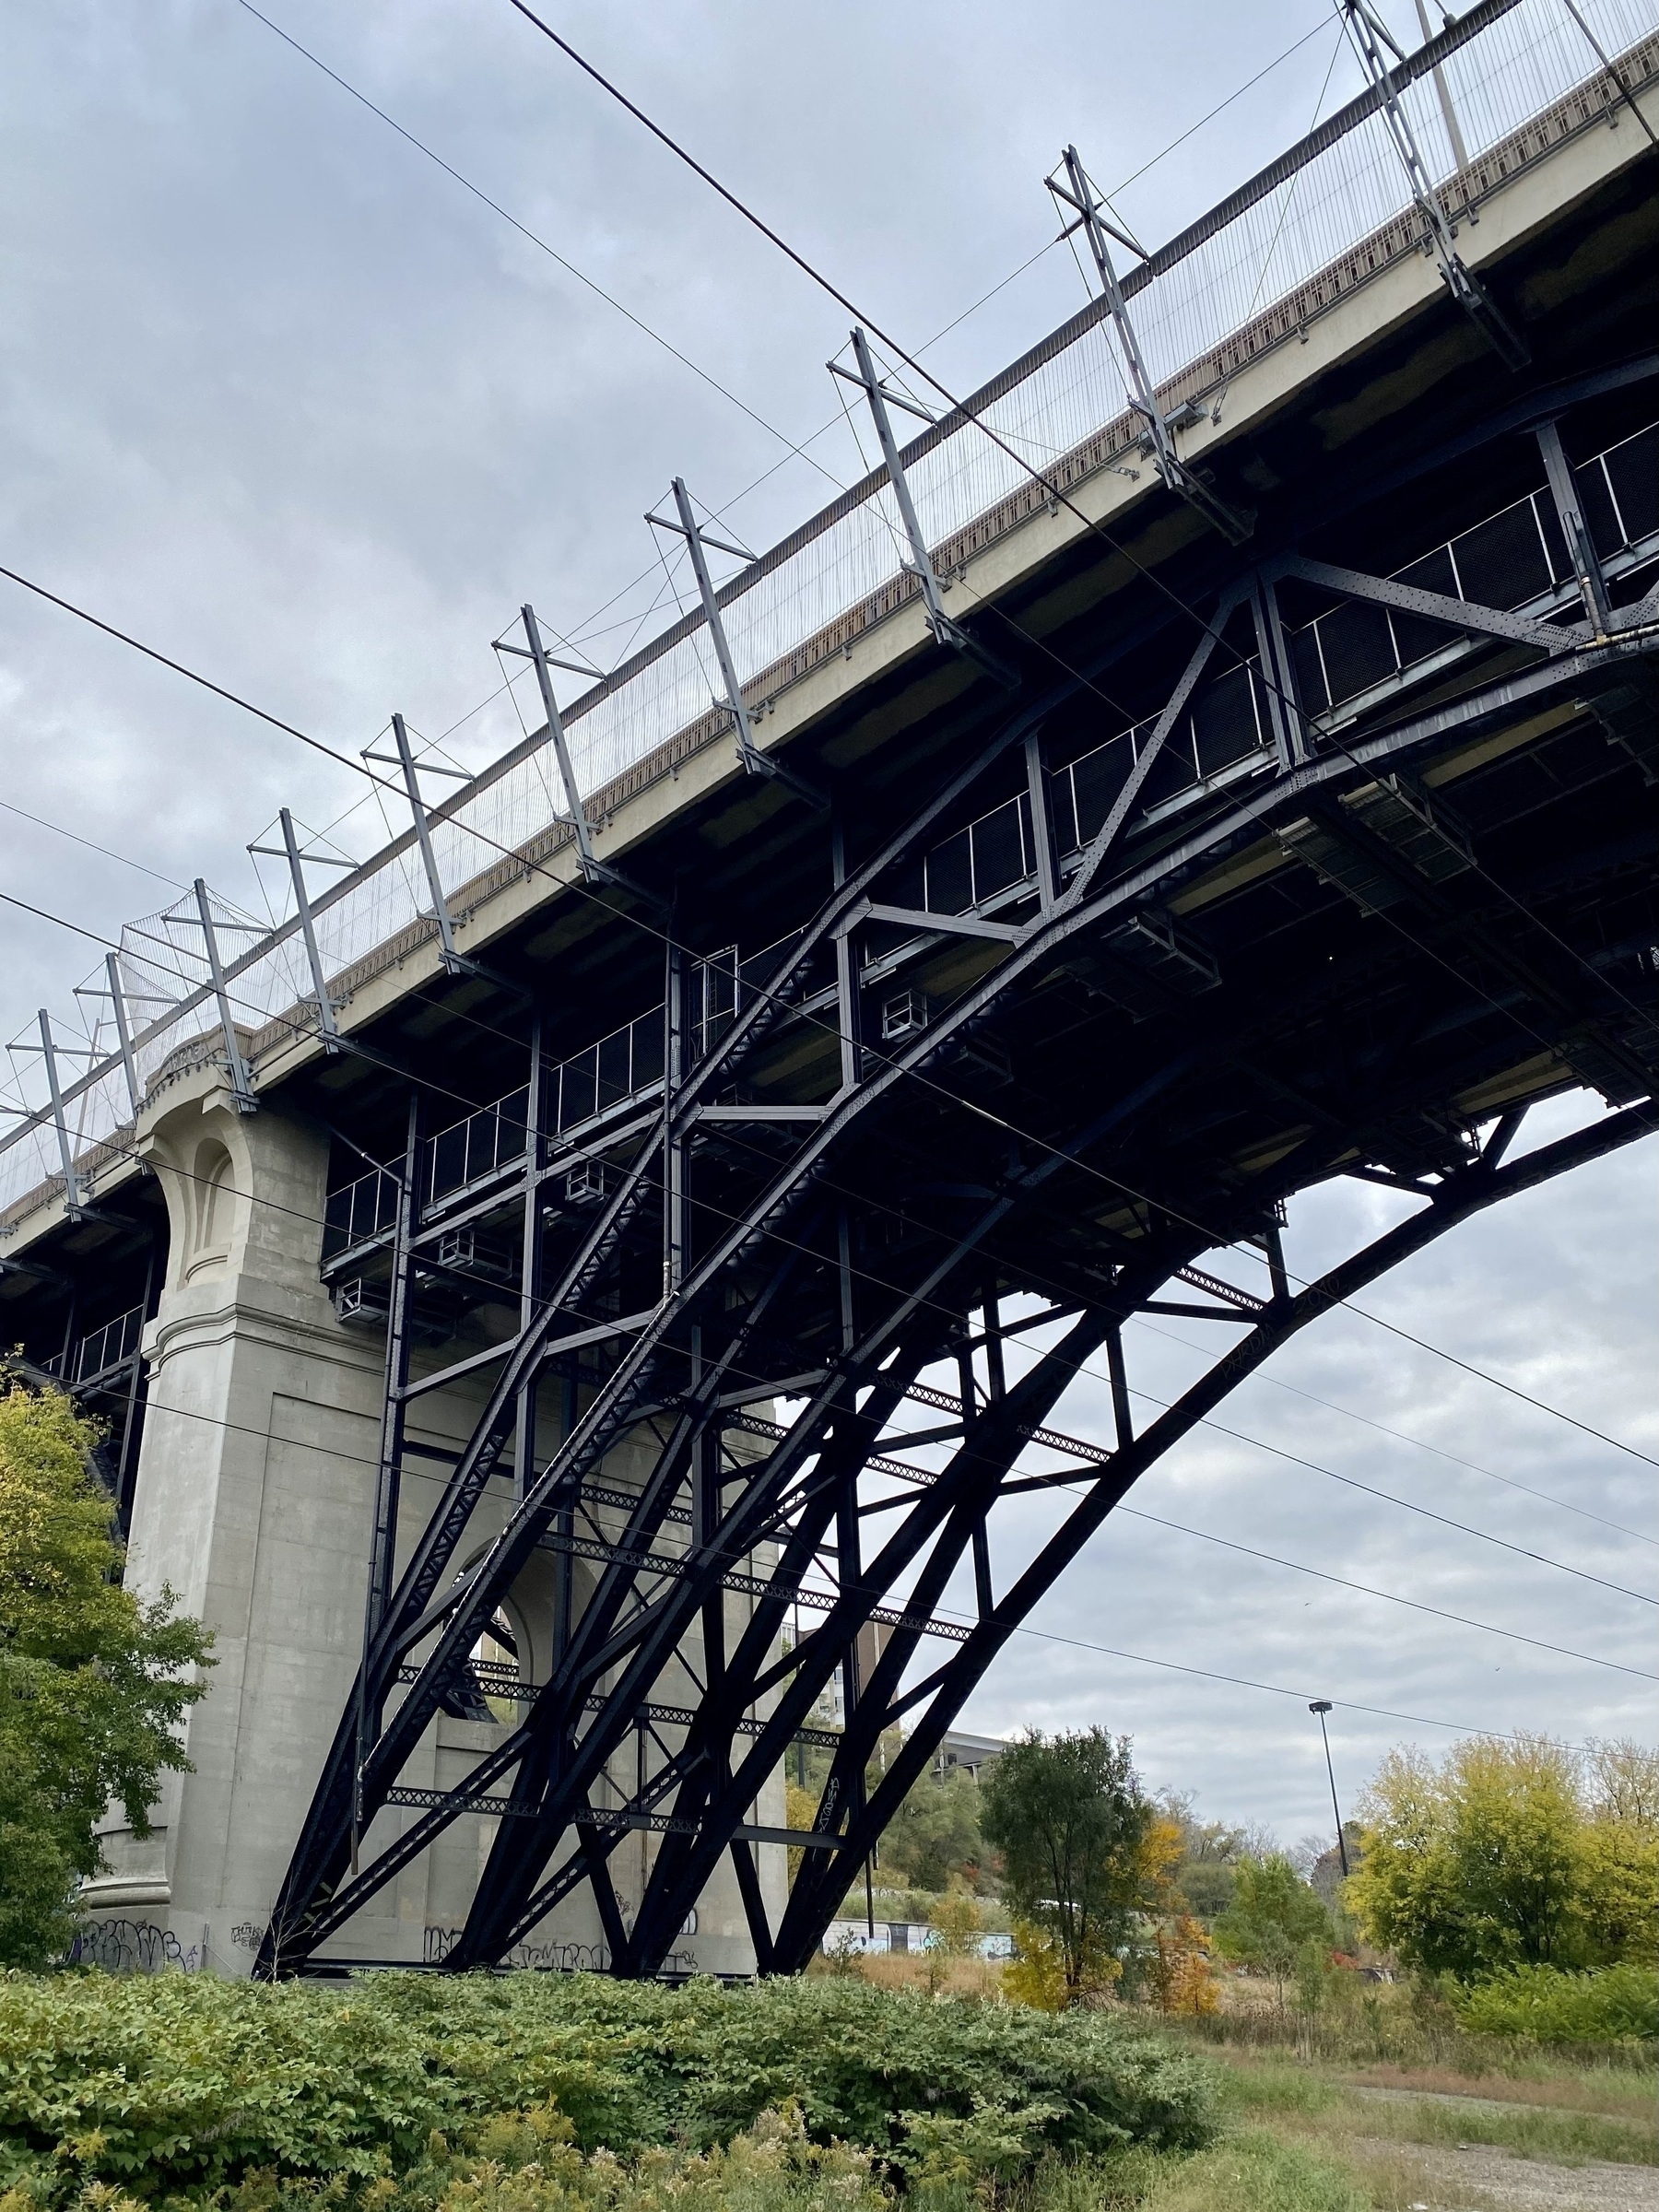 Support structures under a bridge